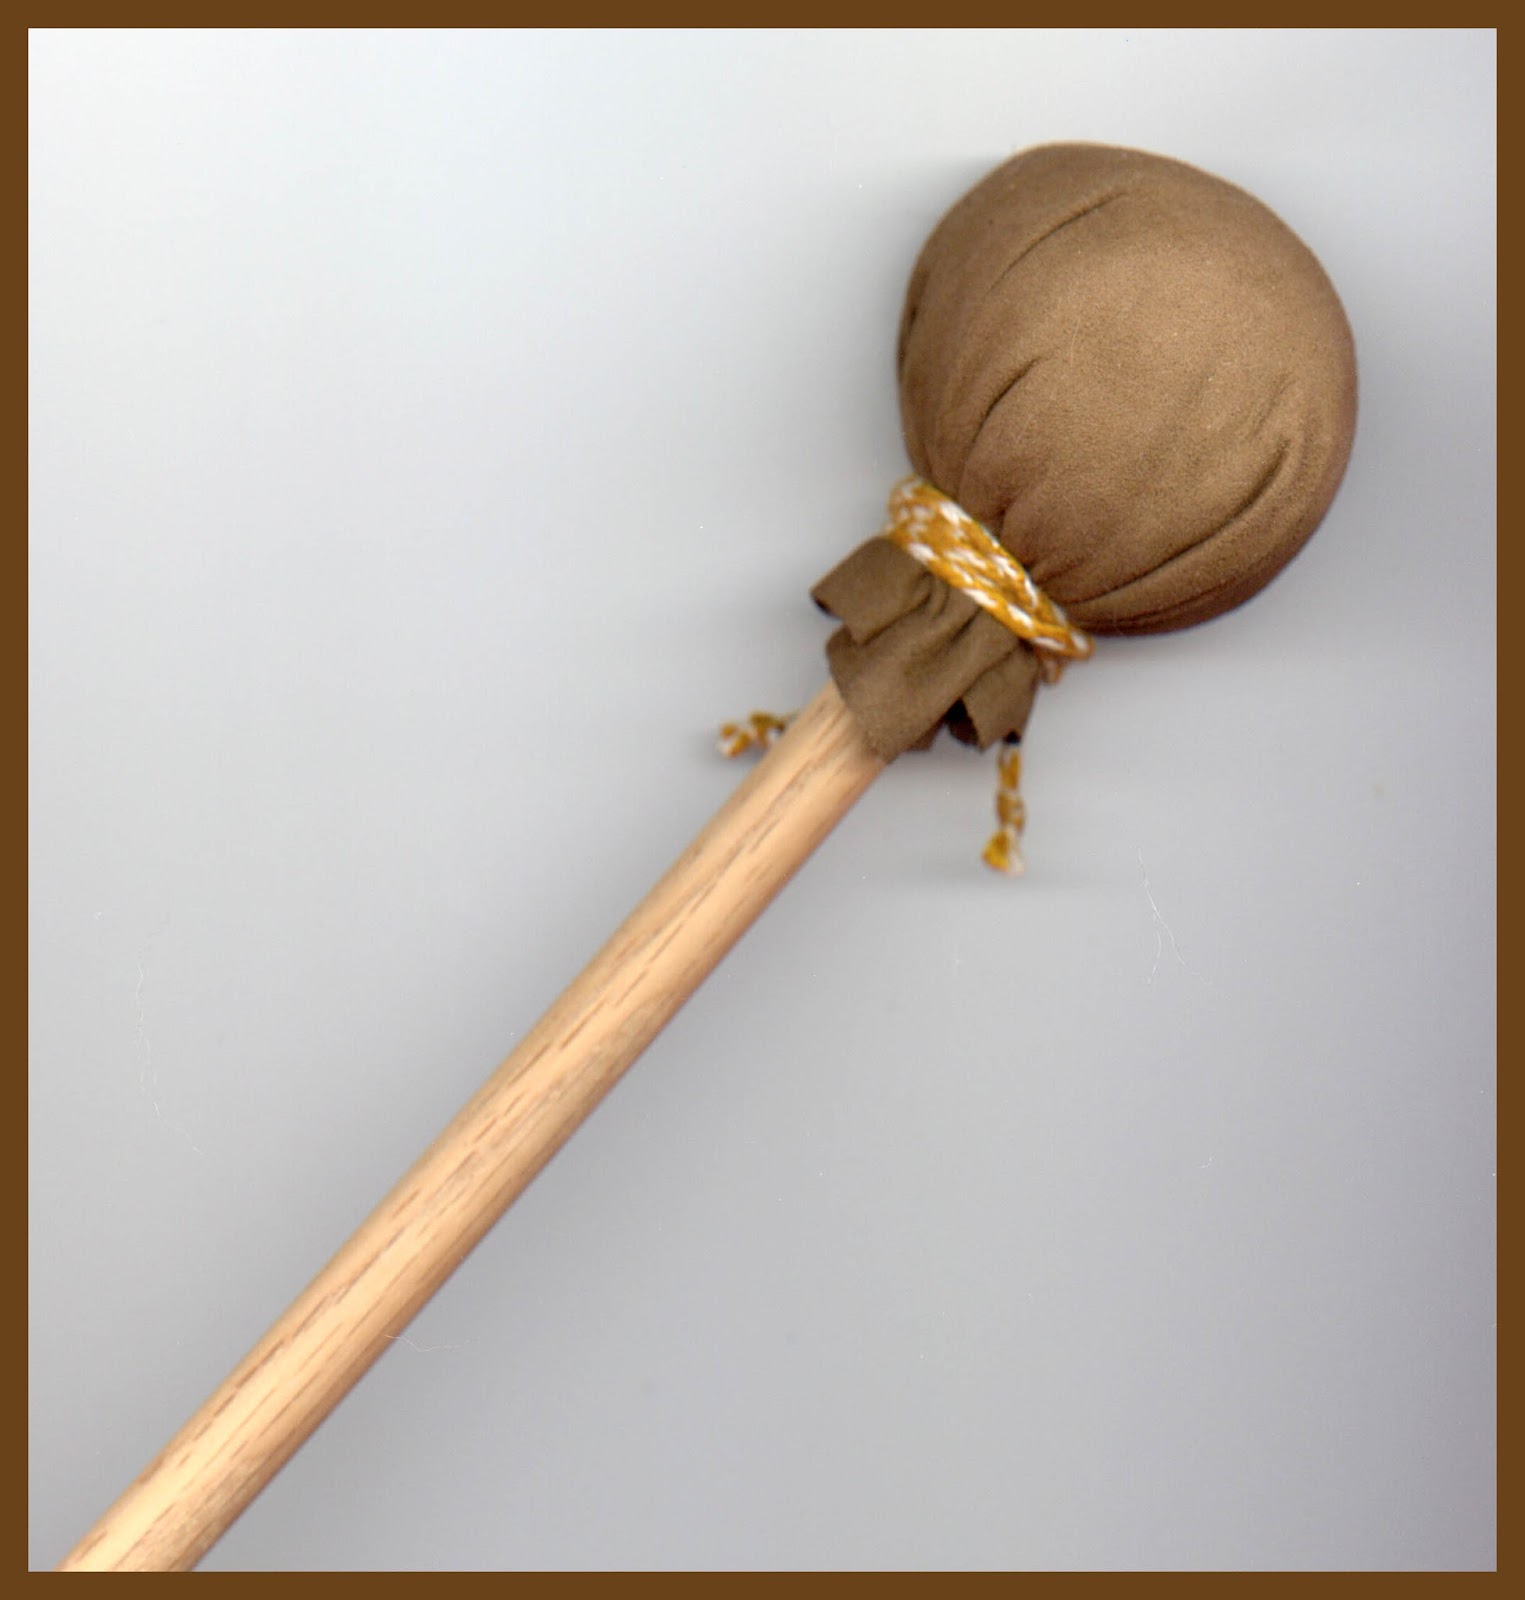 Medieval Arts & Crafts: Mahl stick, homemade version